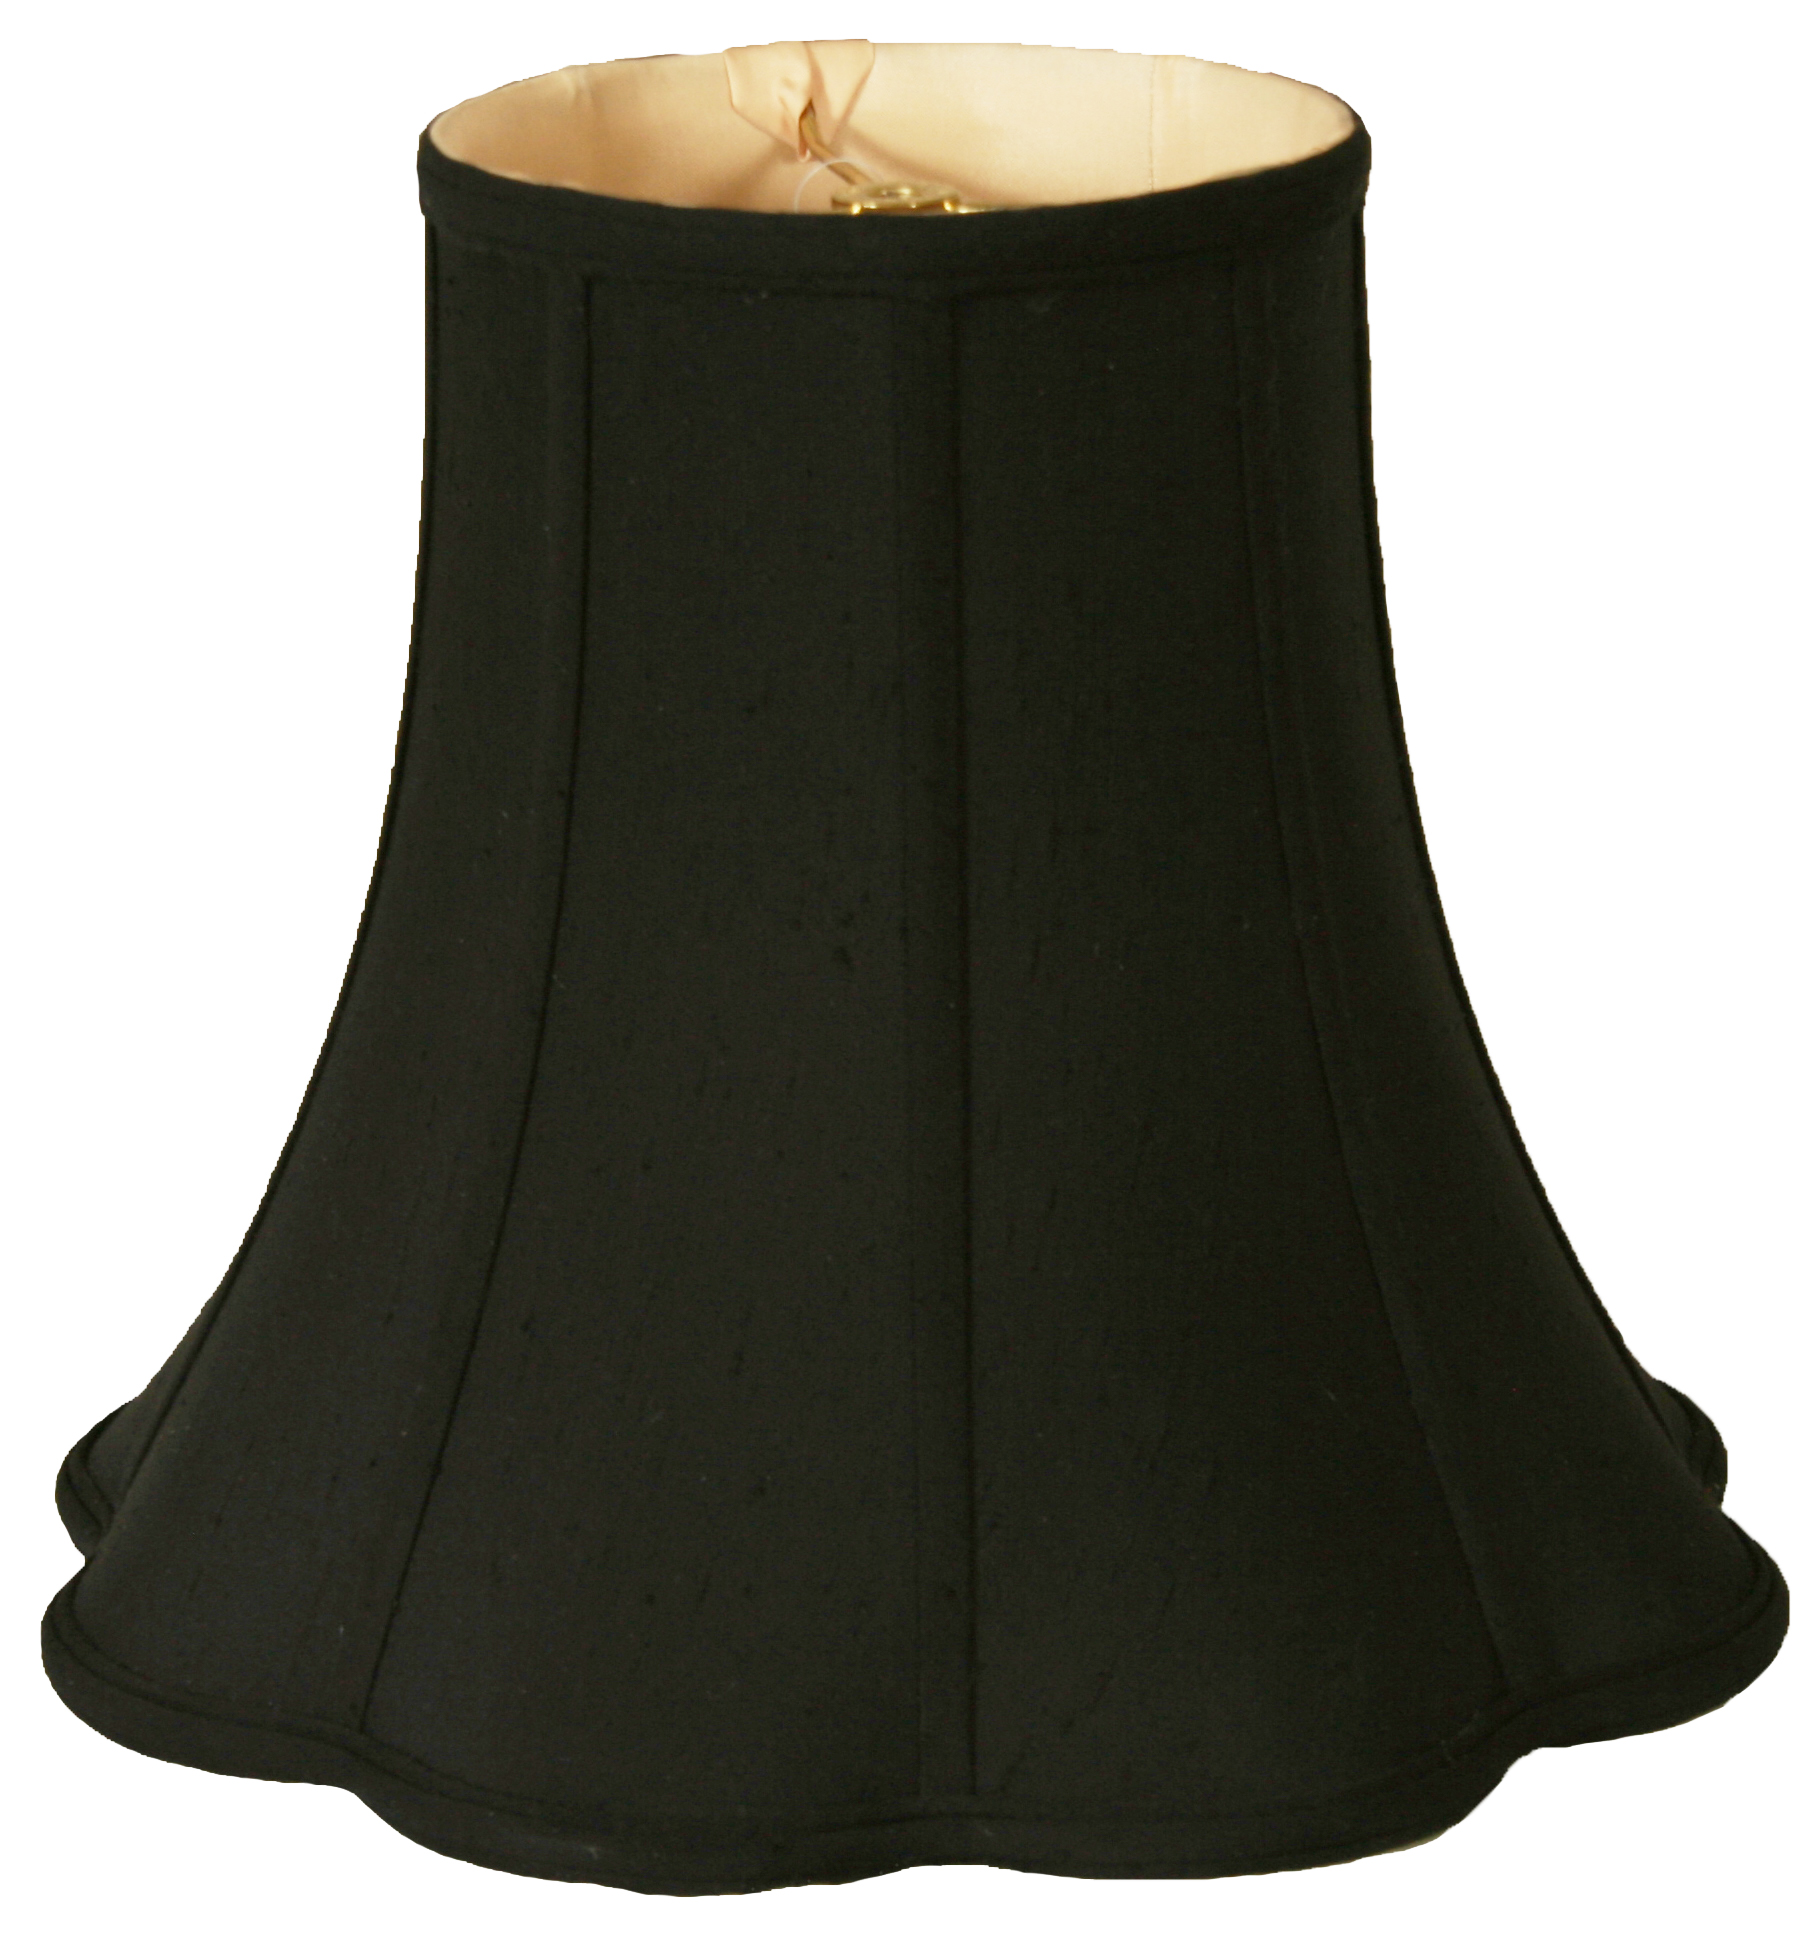 Royal Designs Scalloped Bell Designer Lamp Shade 4.5 x 9 x 7.75 Beige